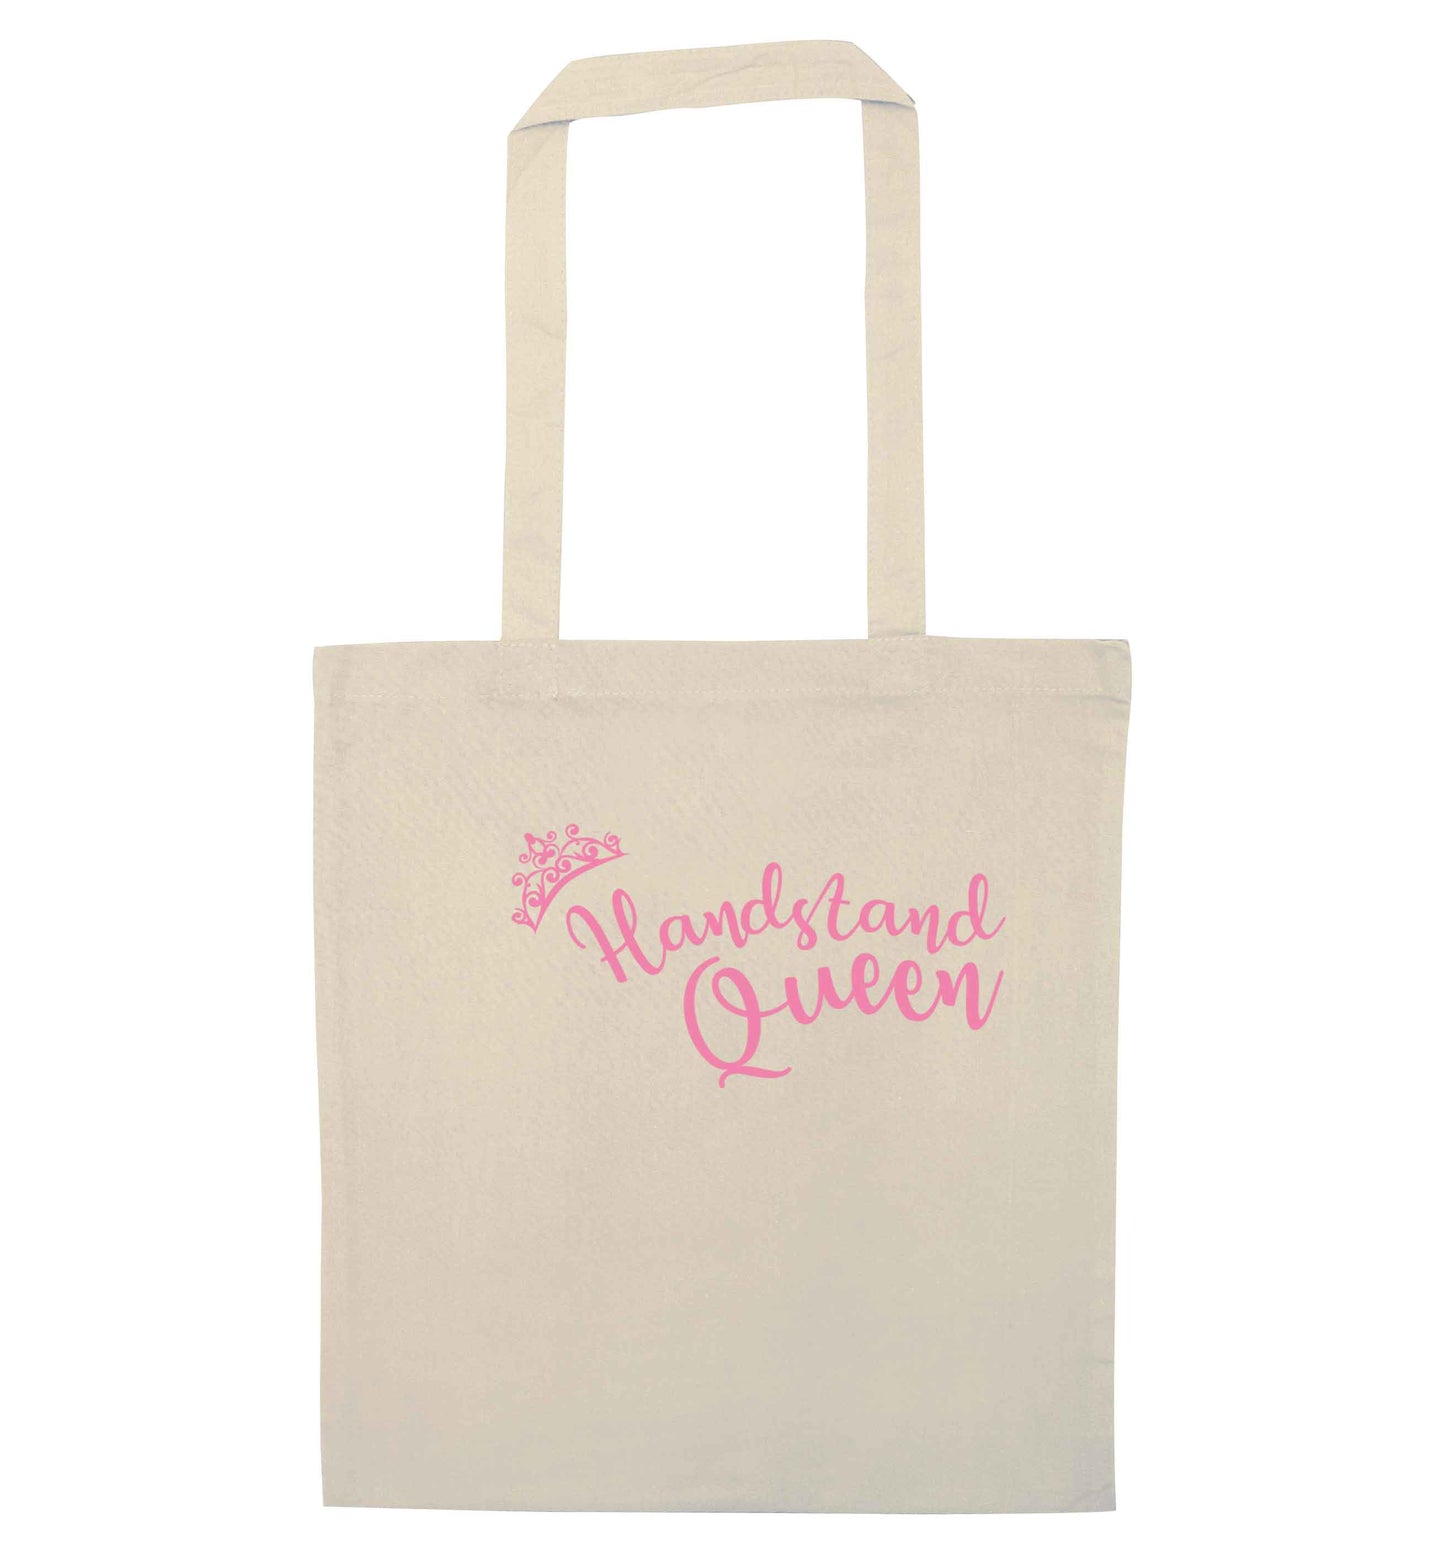 Handstand Queen natural tote bag